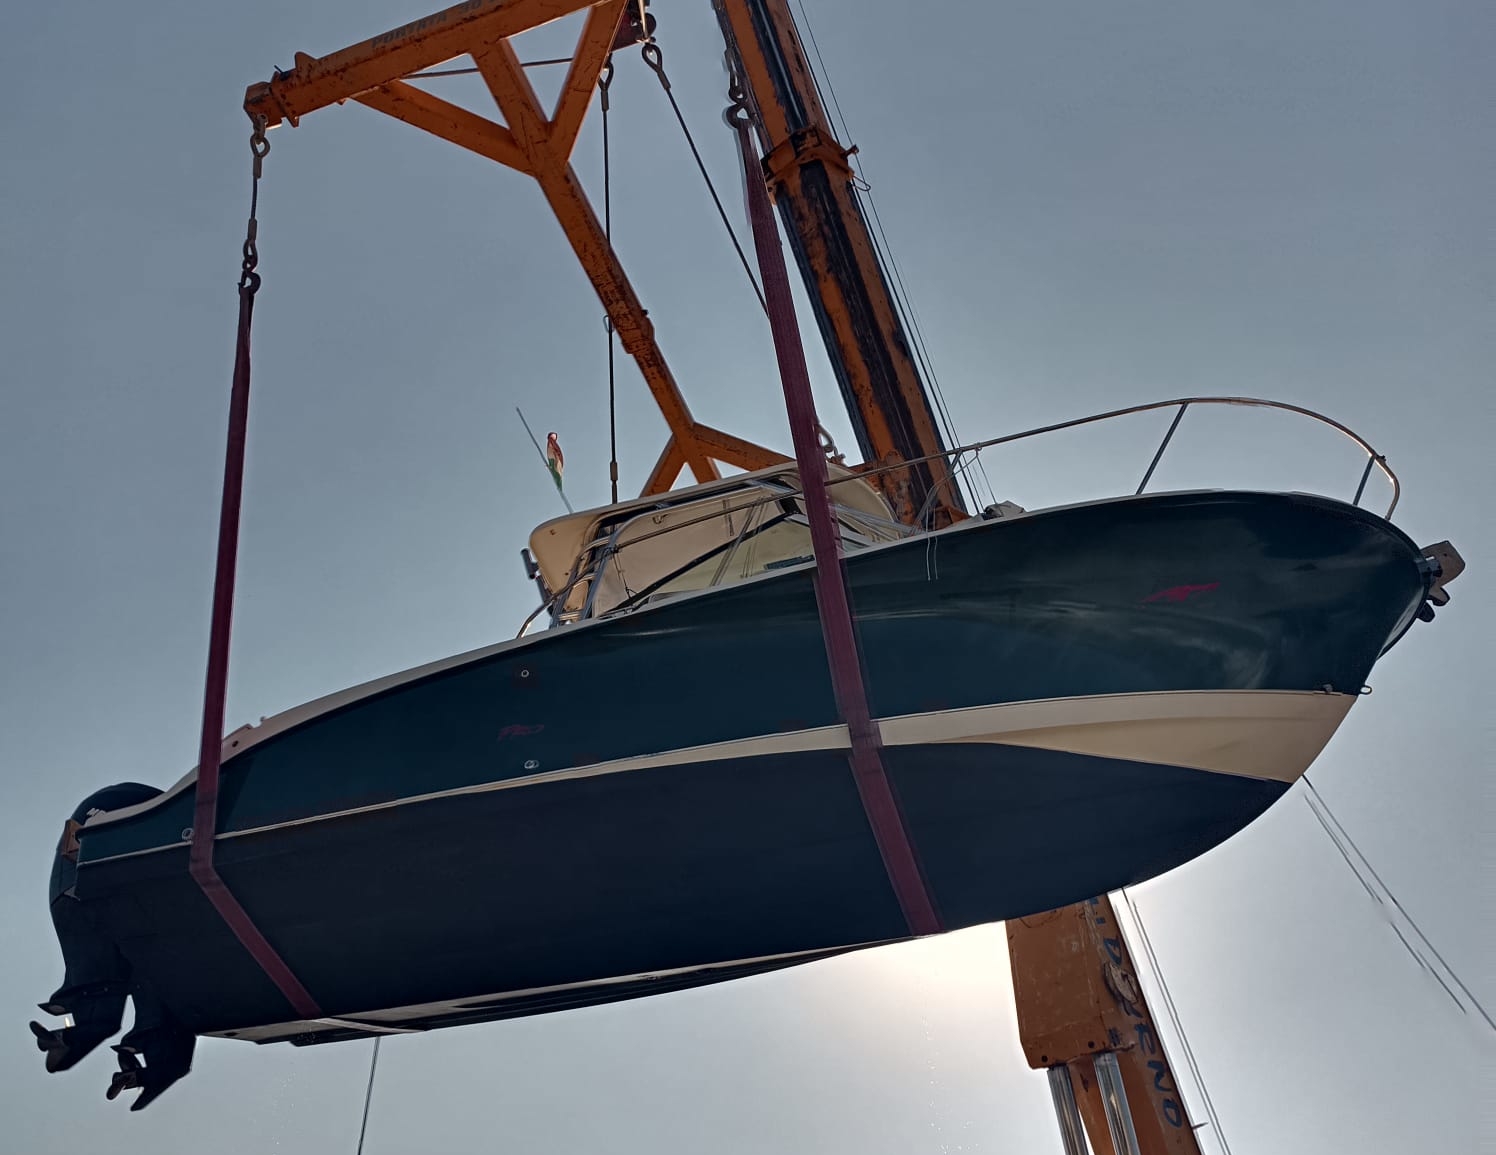 Fiart 35 + 2x200 hp Aifo daycruiser livorno boats imbarcazione boat barco bateaux